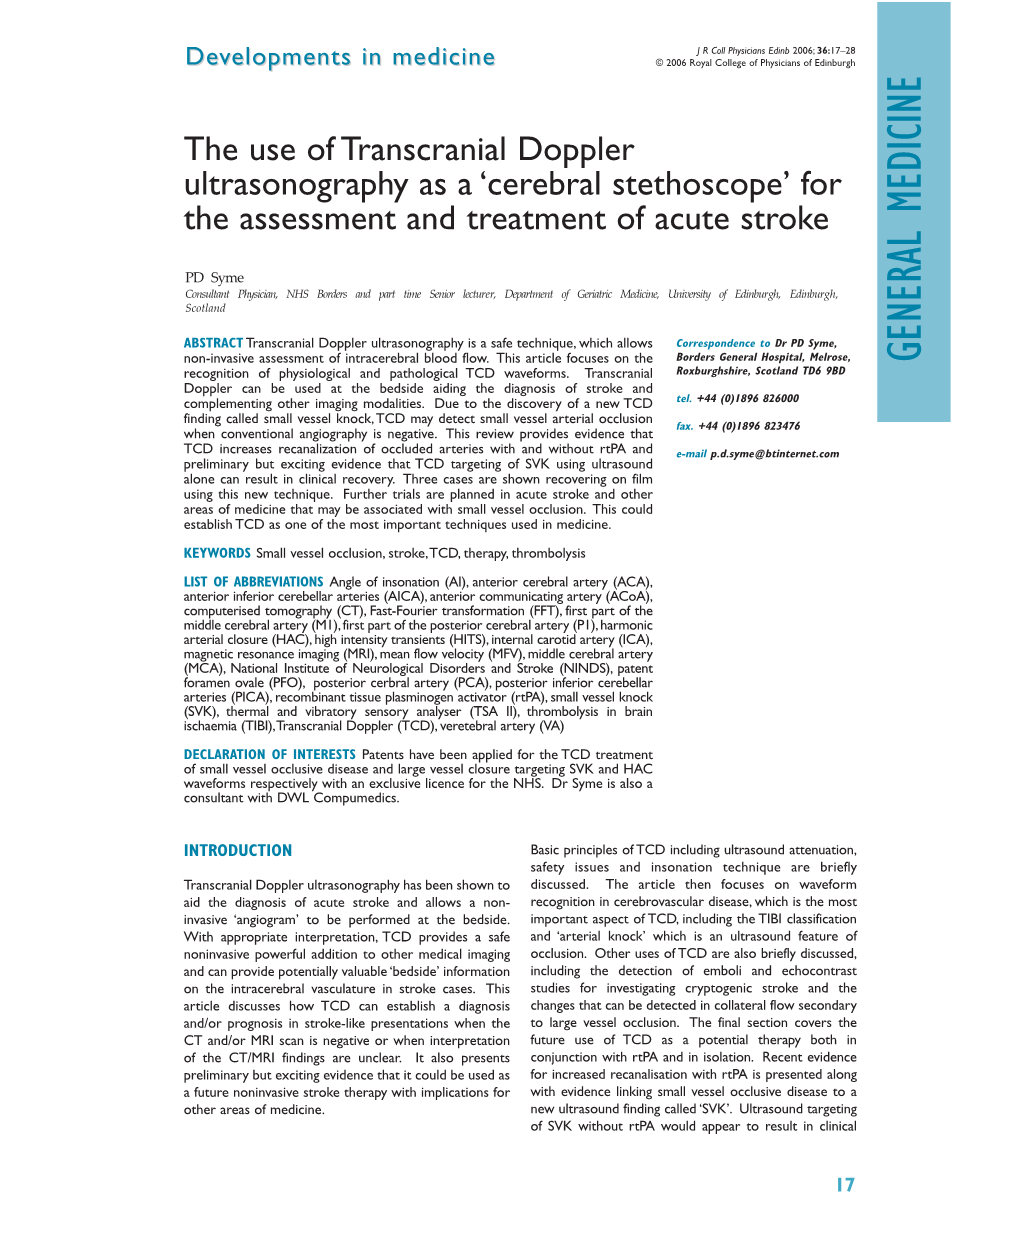 The Use of Transcranial Doppler As a 'Cerebral Stethoscope'